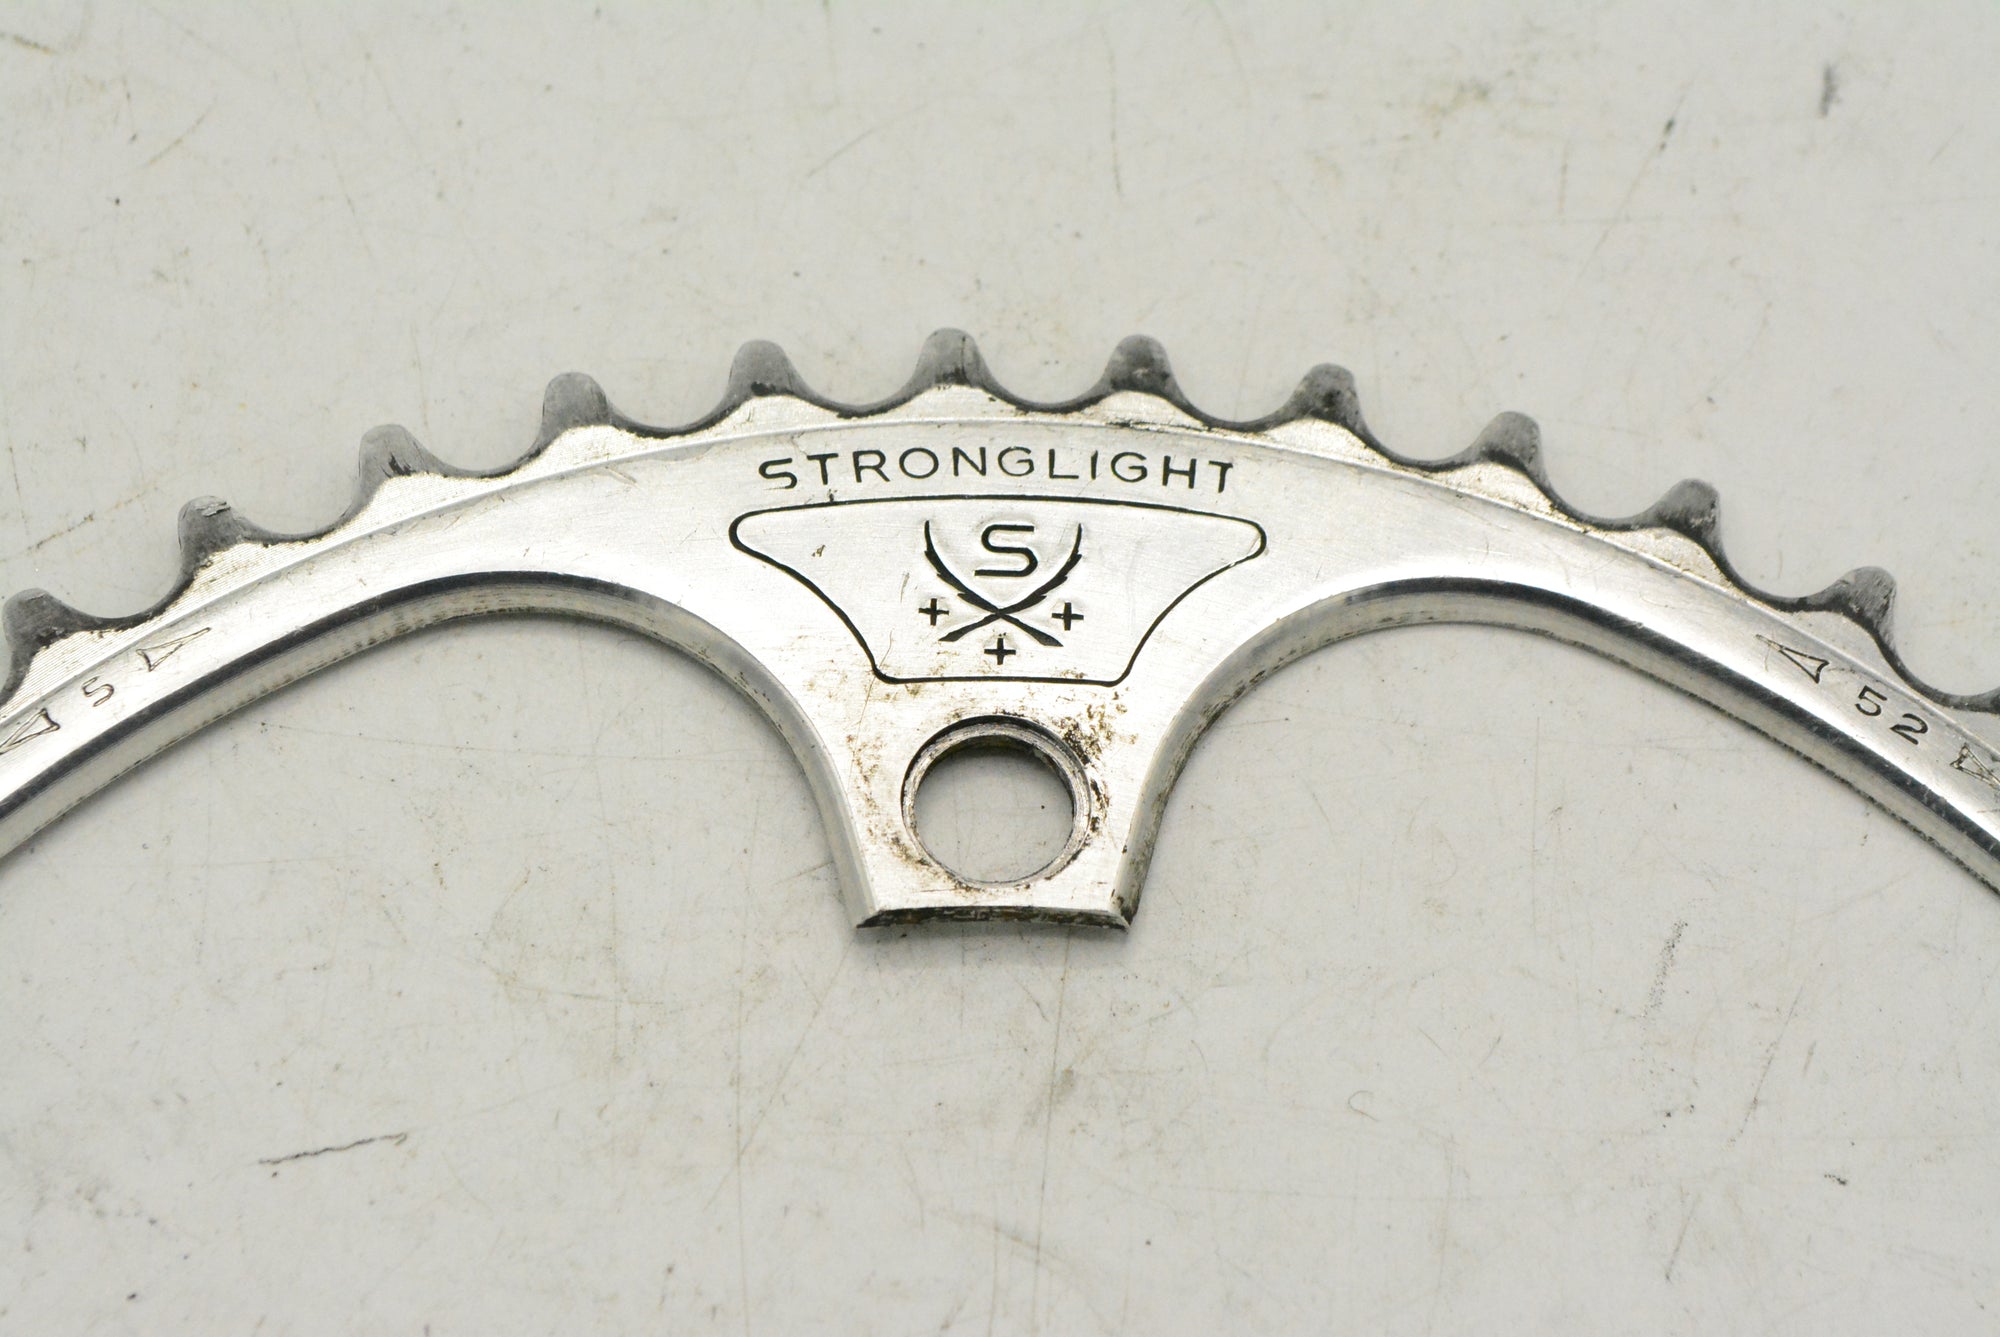 Stronglight Kettenblatt 52 Zahn 144mm